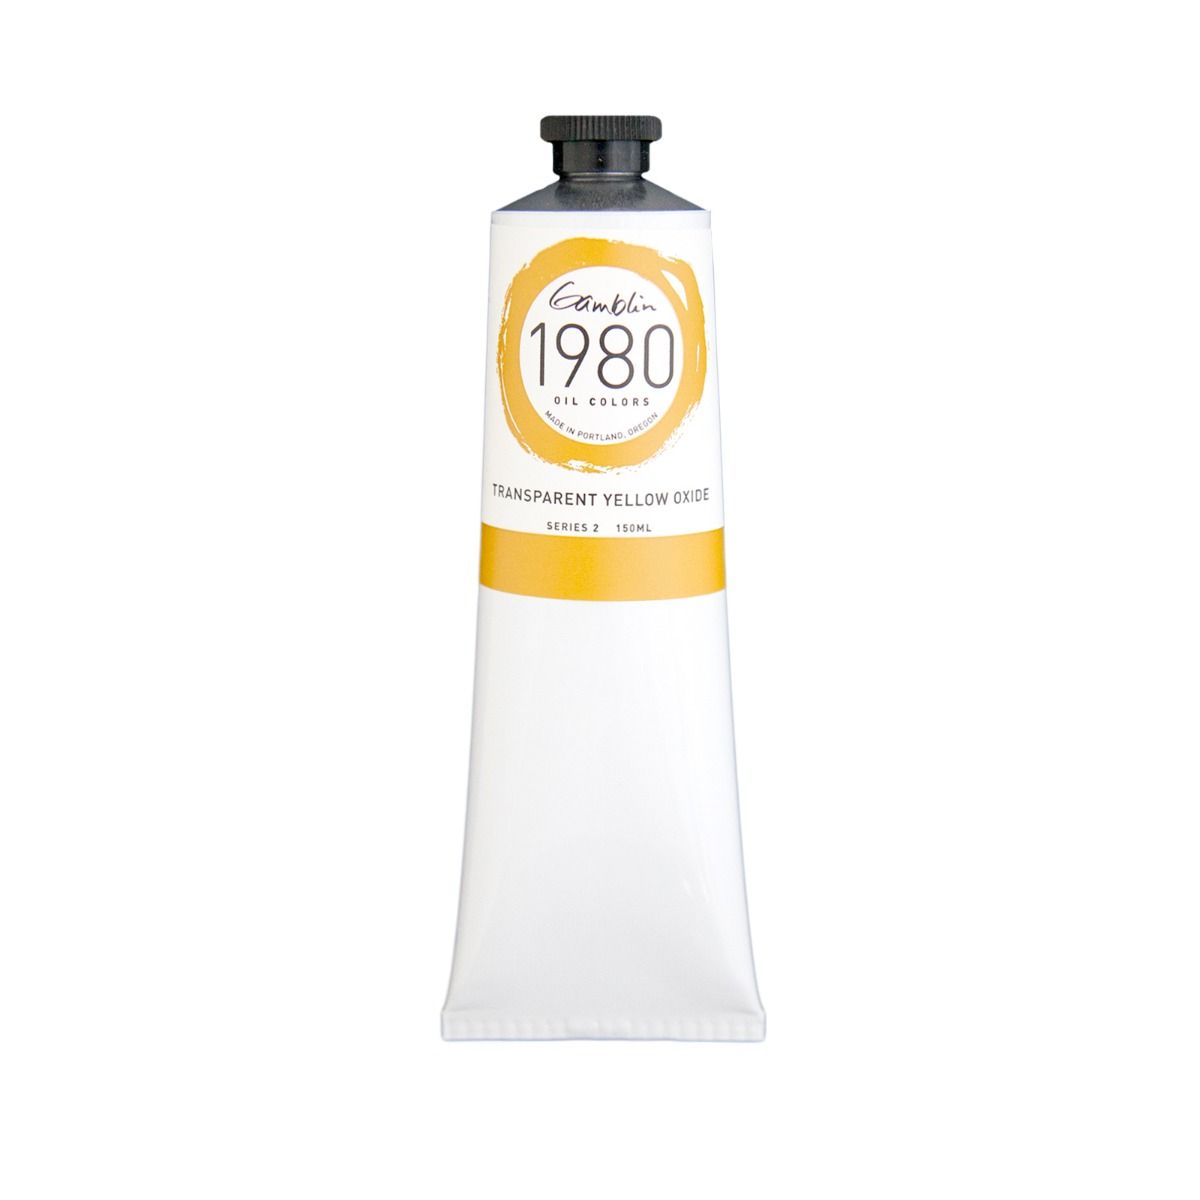 Gamblin 1980 Oils - Transparent Yellow Oxide, 150 ml (5.07oz)